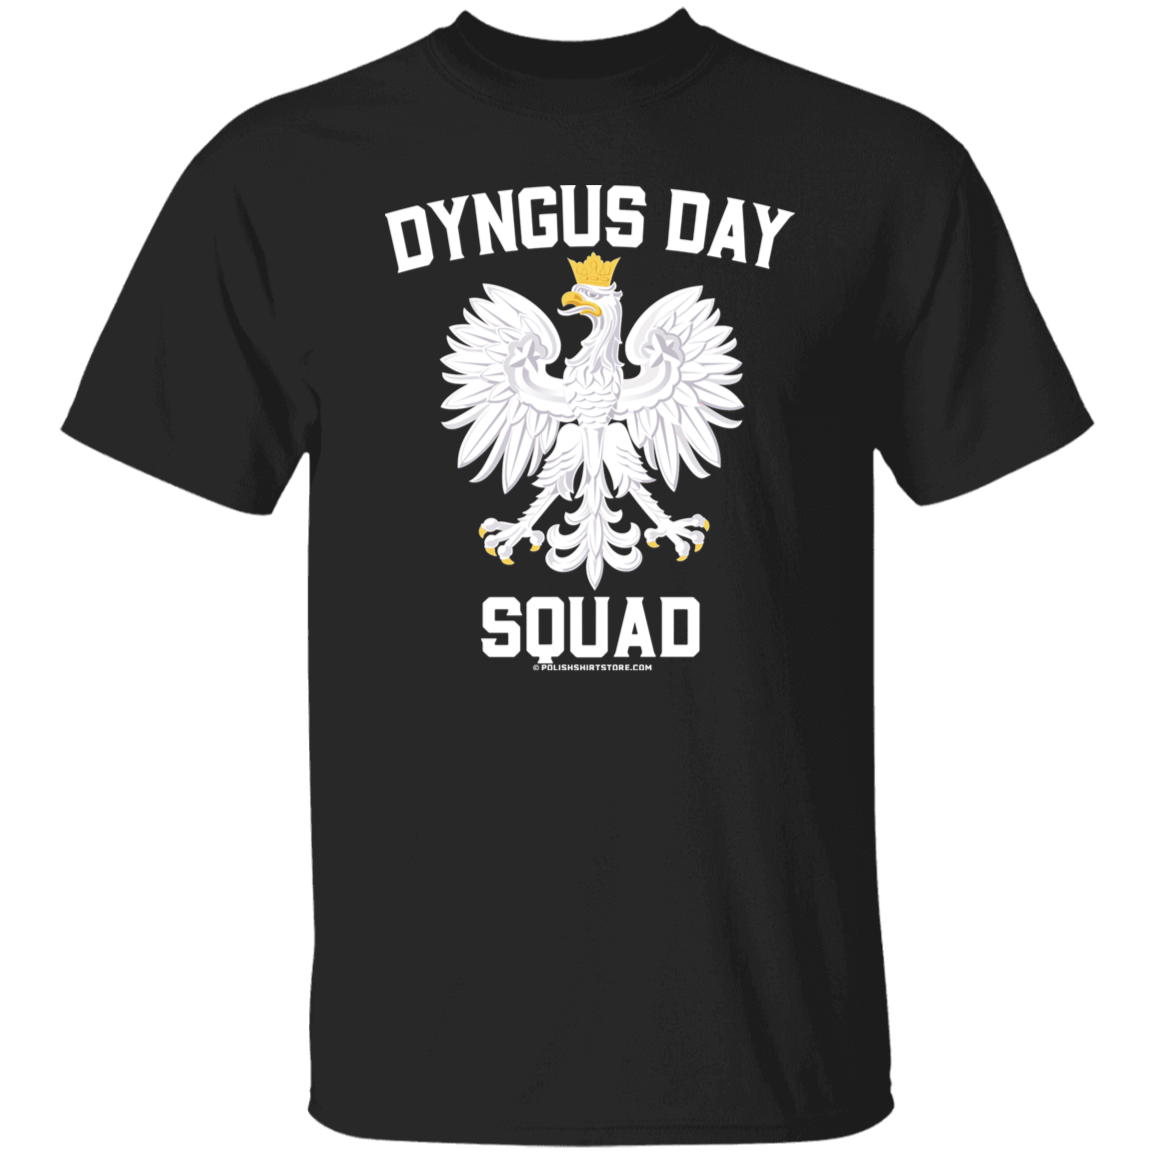 Dyngus Day Squad Apparel CustomCat G500 5.3 oz. T-Shirt Black S